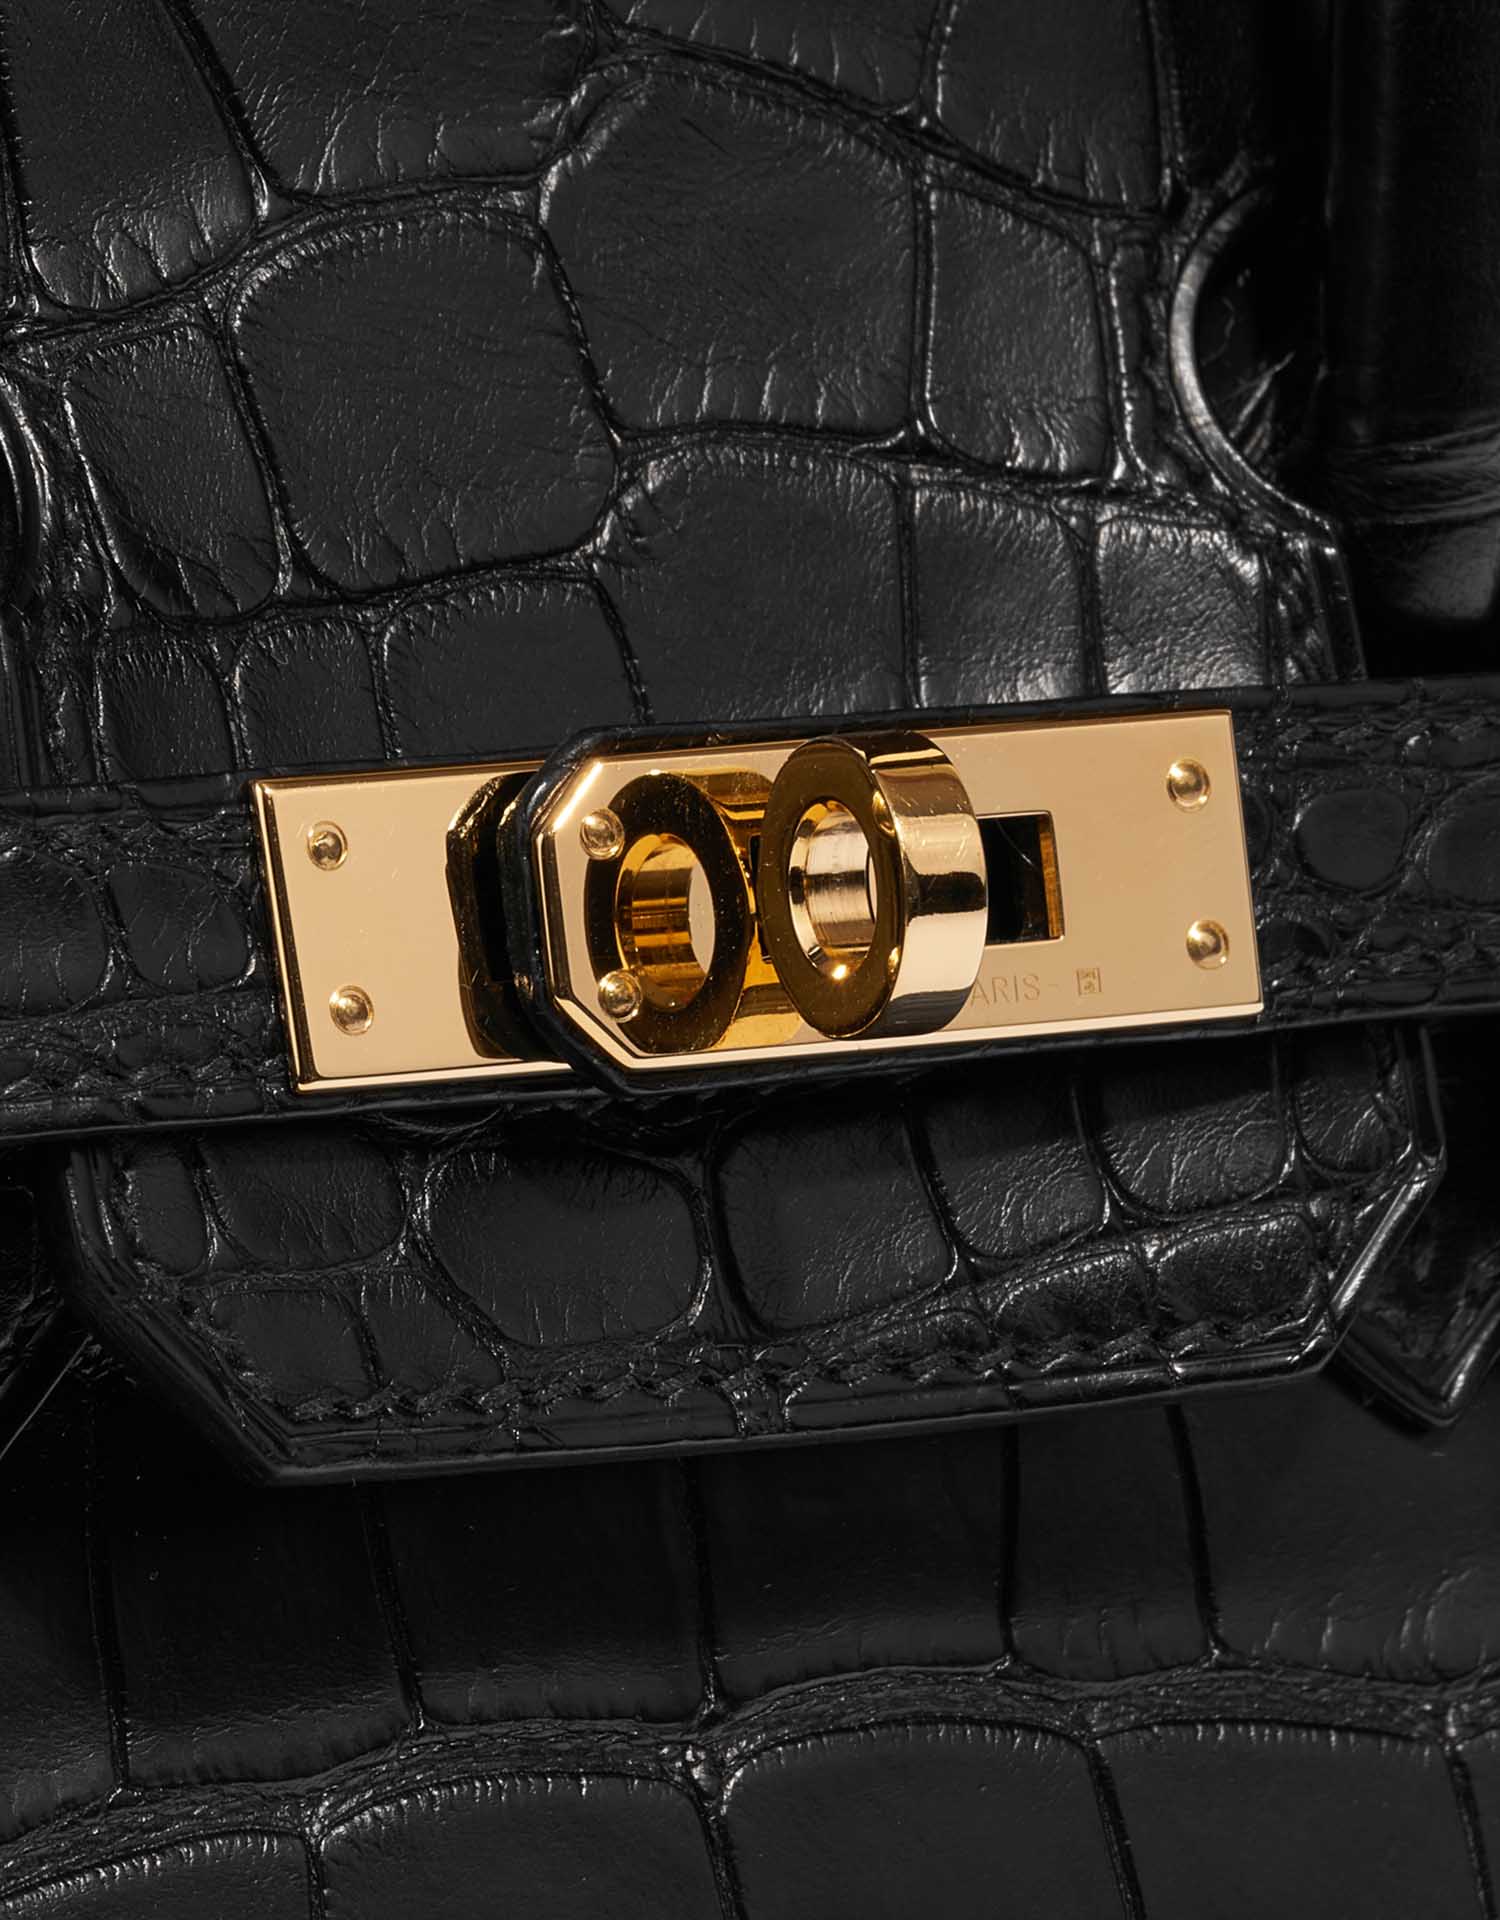 Hermes So Black Birkin 25 Handbag 89 Noir Matte Alligator SHW